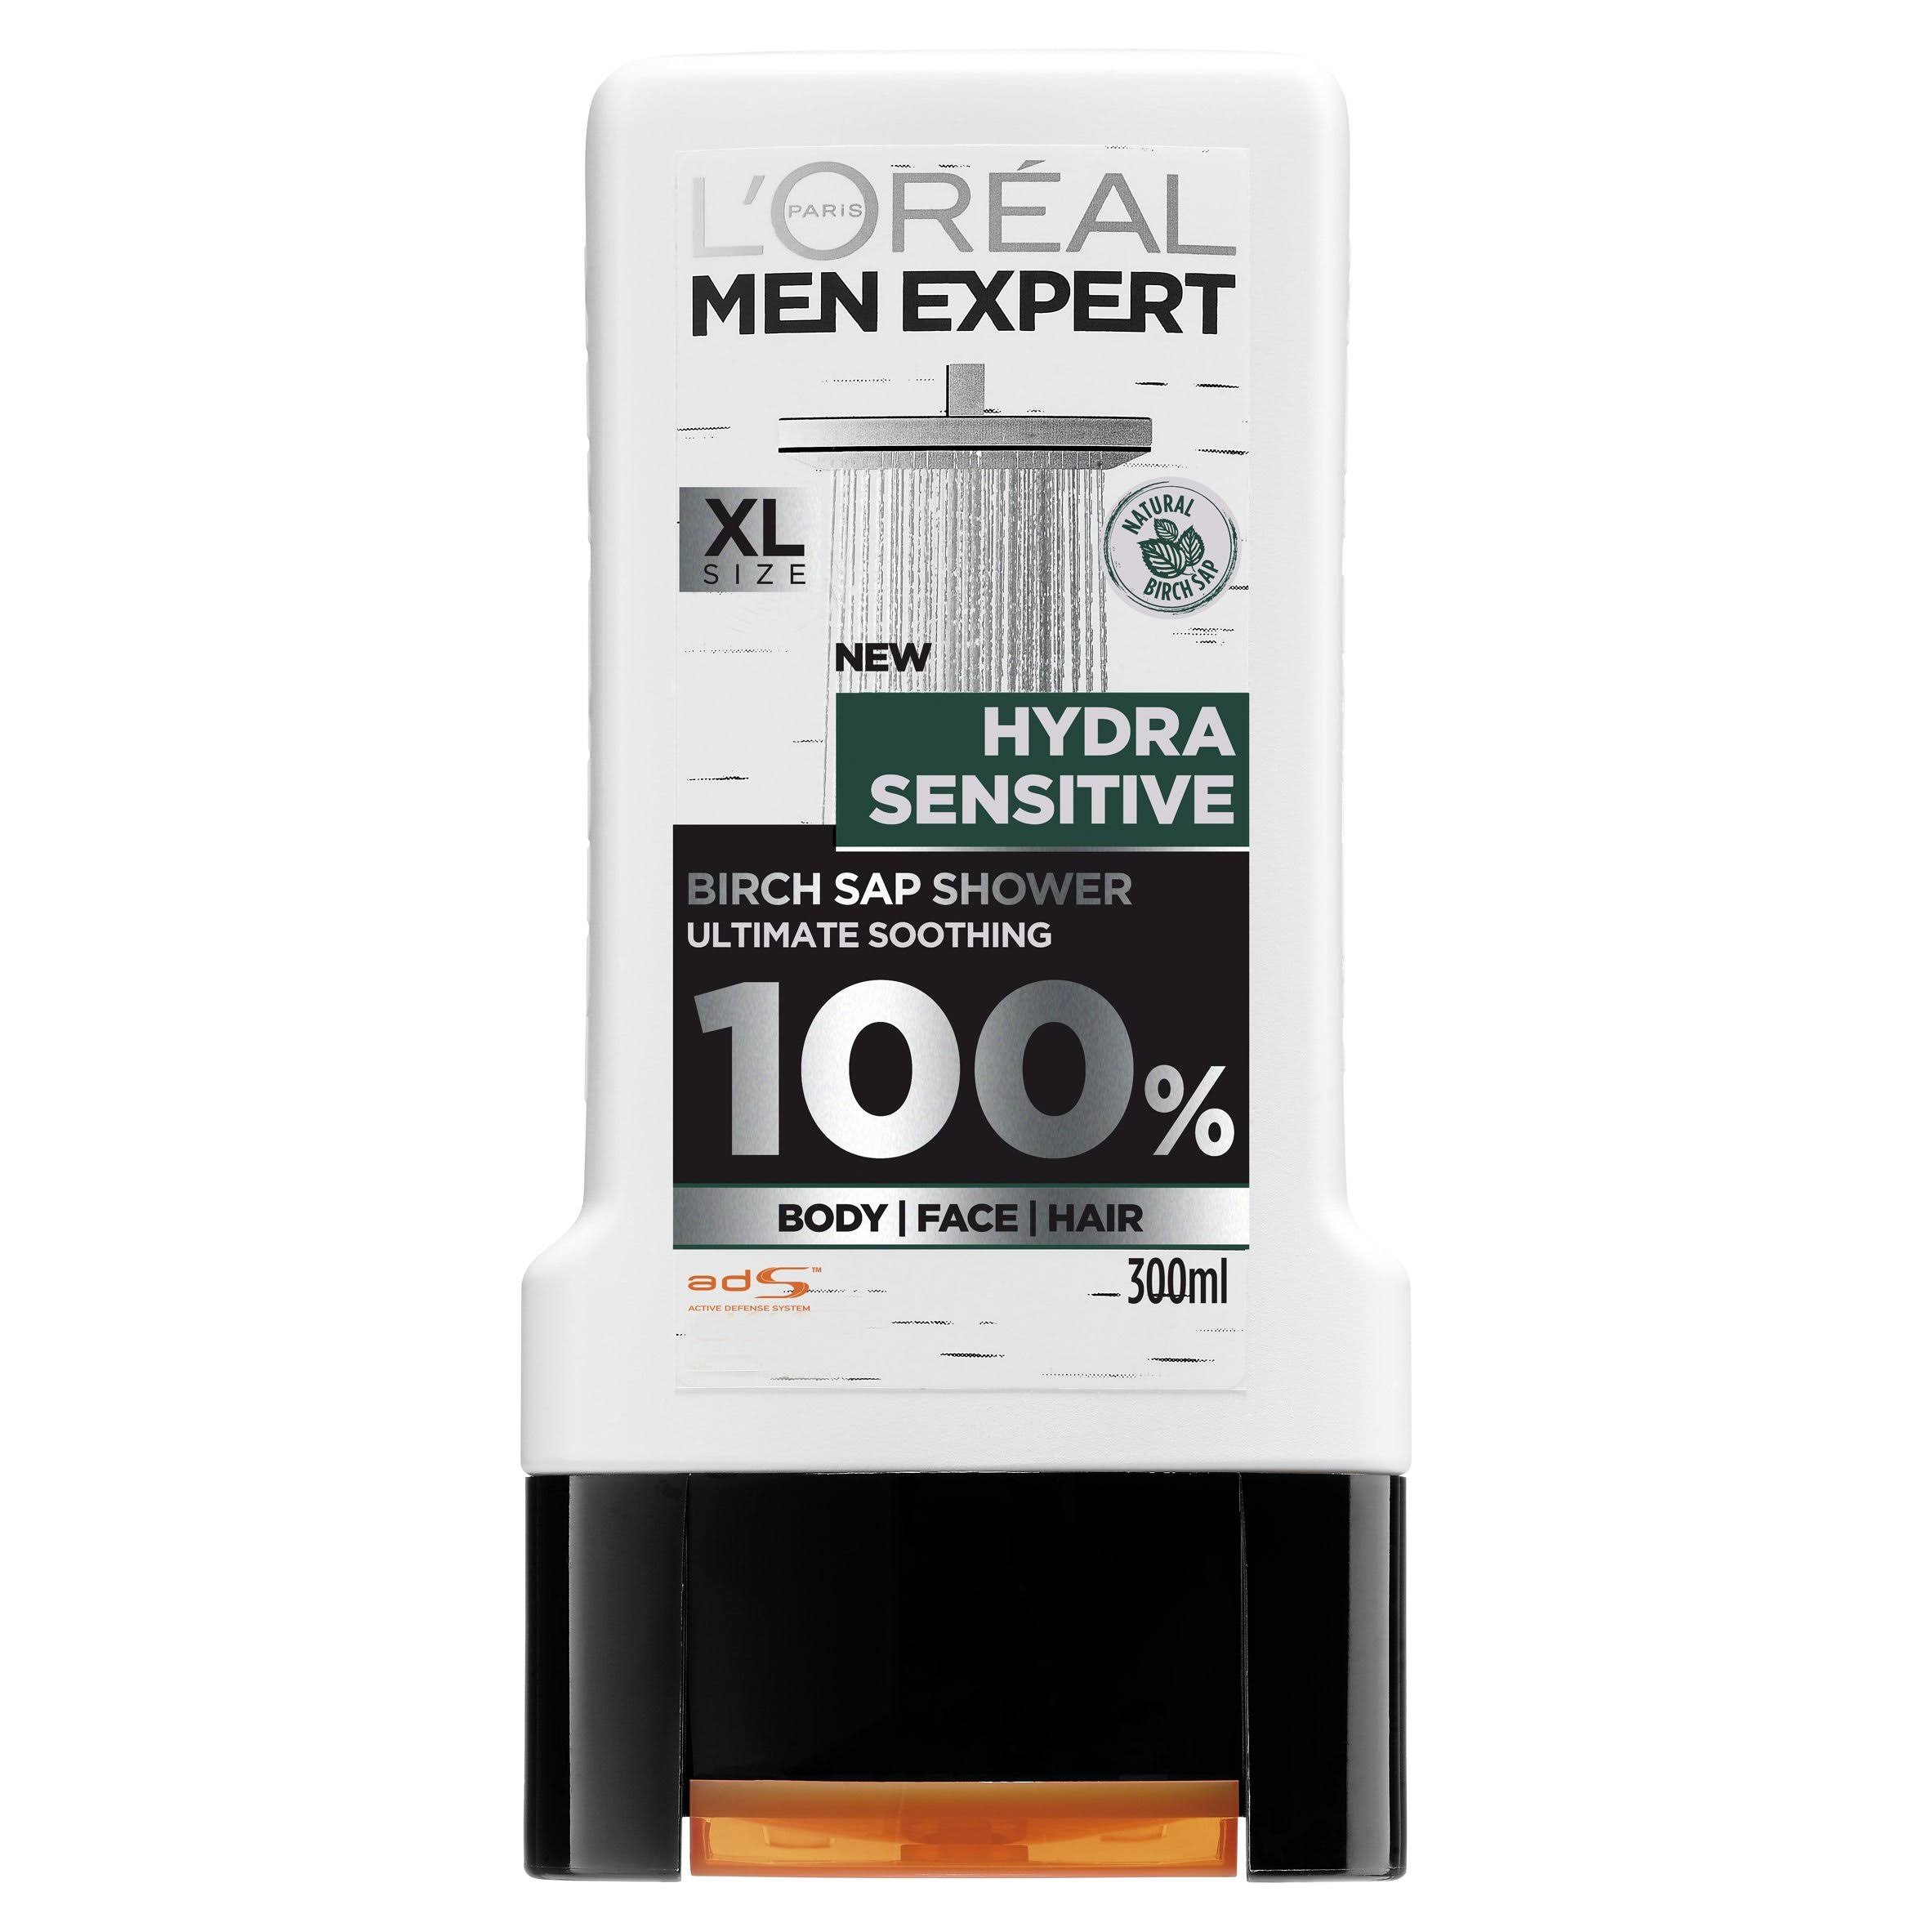 L'Oreal Men Expert Hydra Sensitive Shower Gel - 300ml